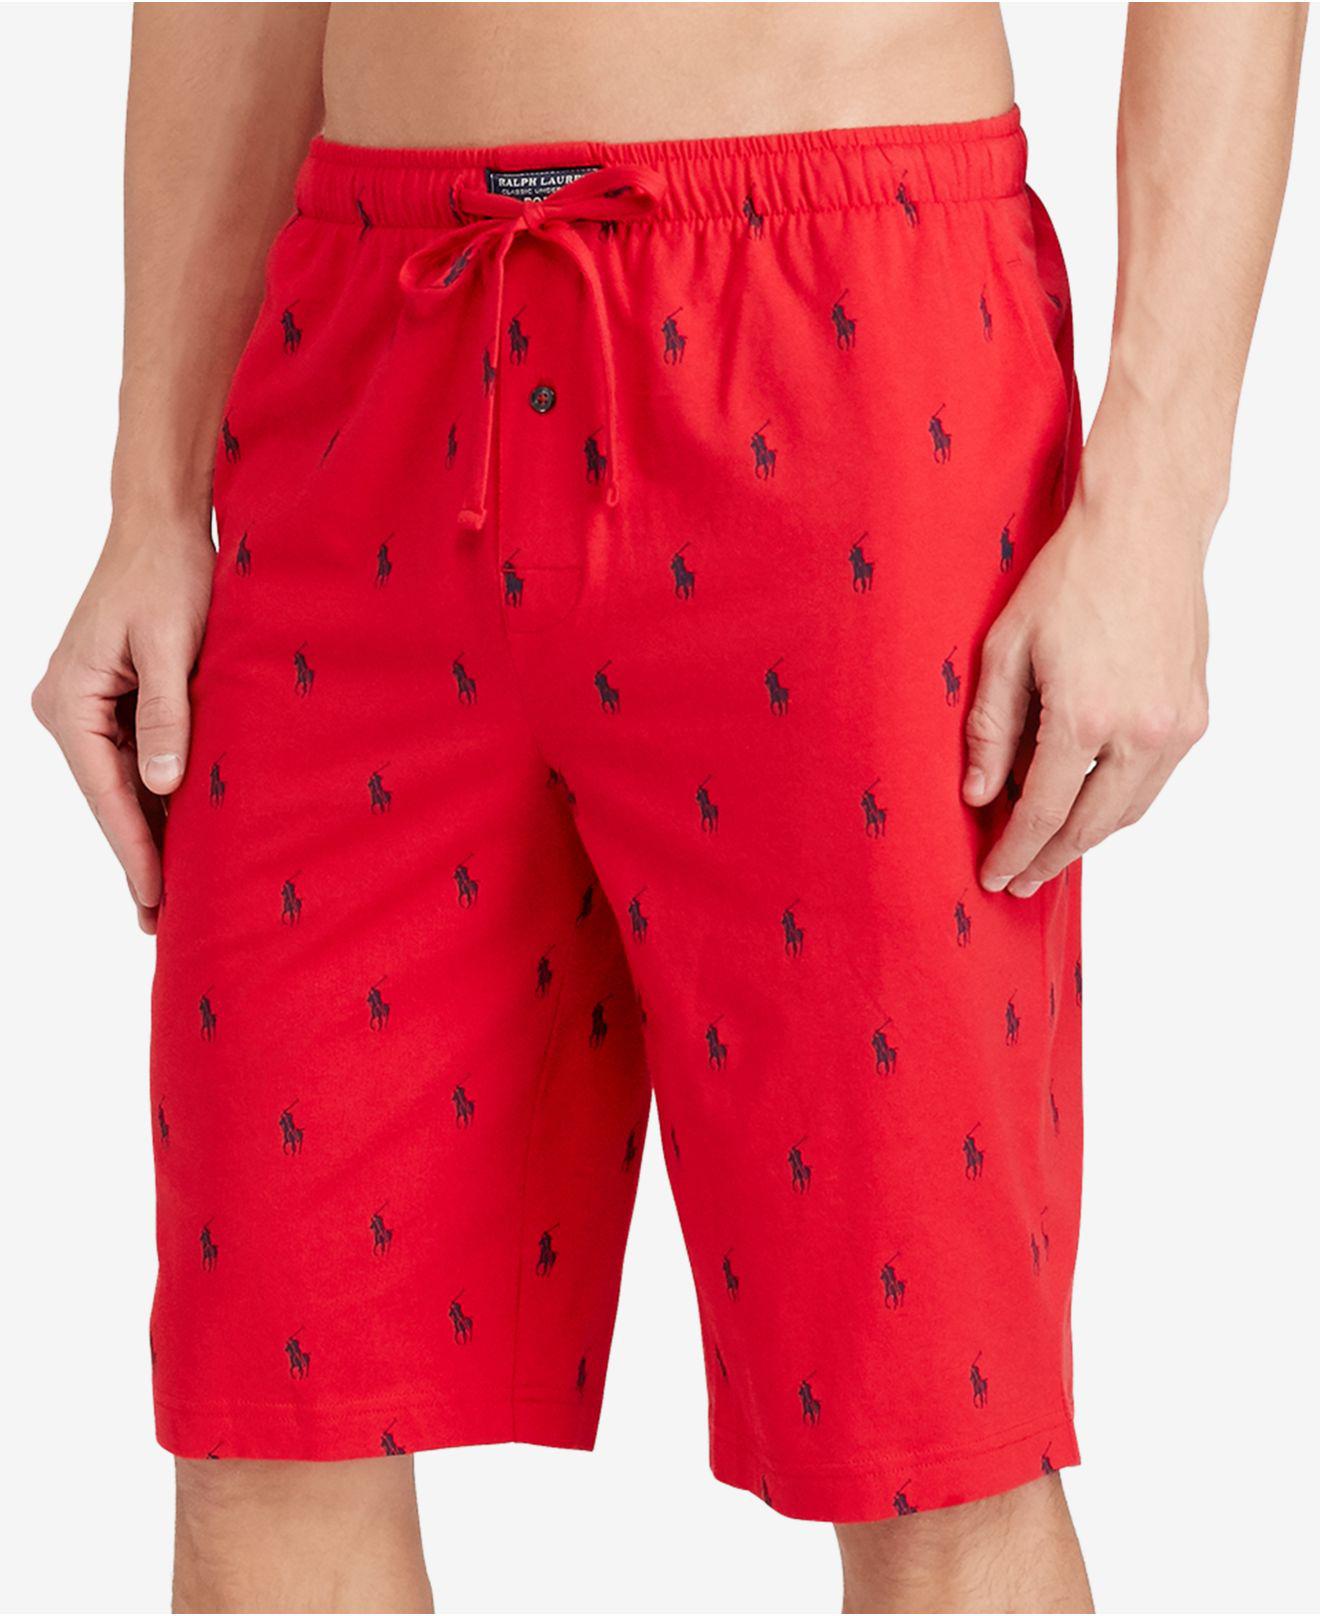 Polo Pajamas Shorts Hotsell, 50% OFF | ilikepinga.com